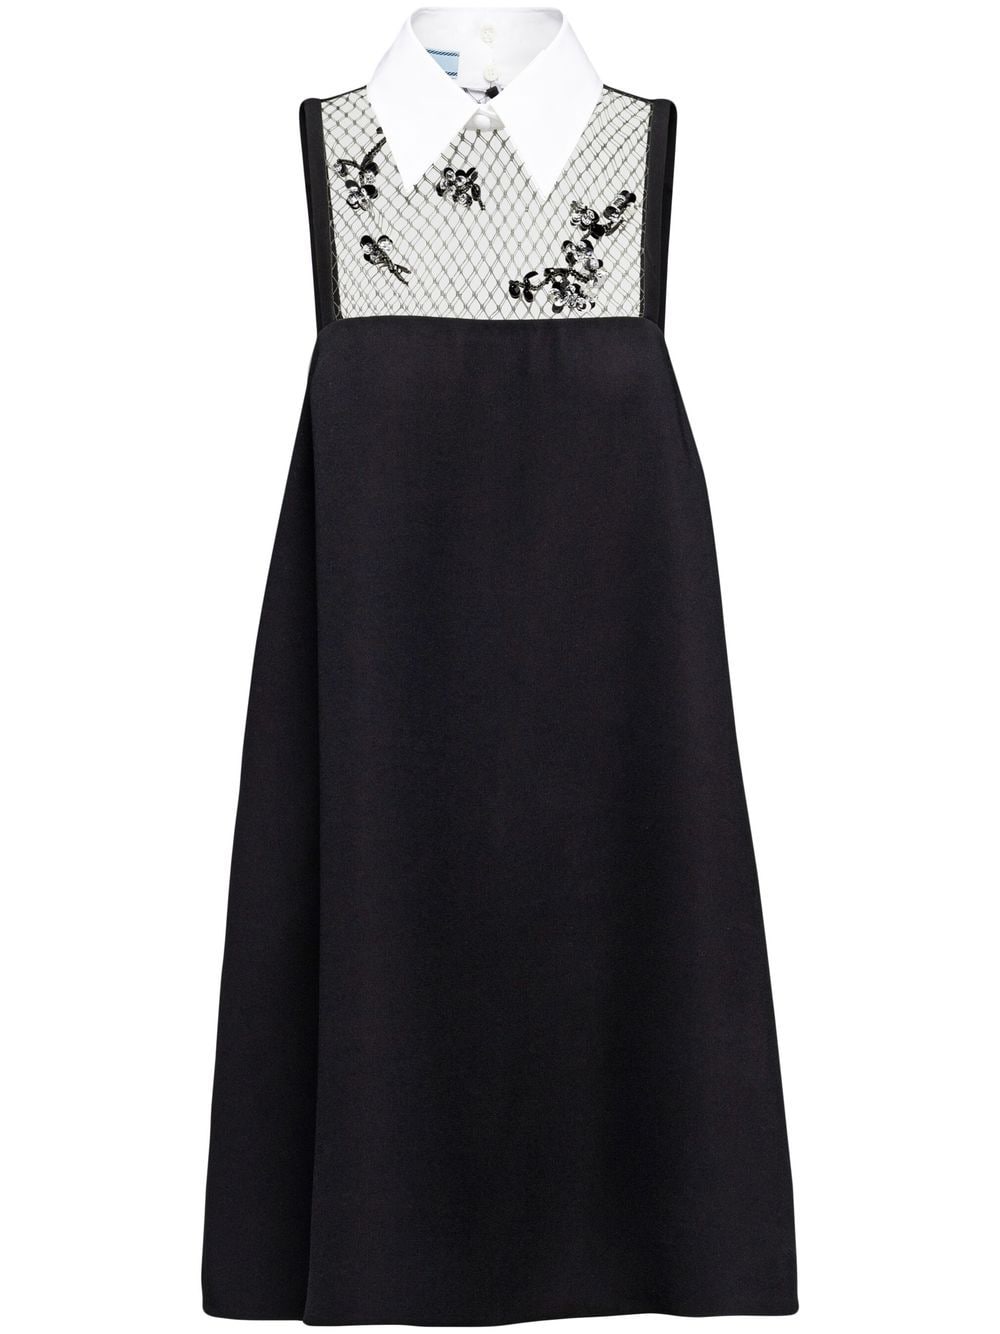 Prada sleeveless embroidered-mesh mini dress - Black